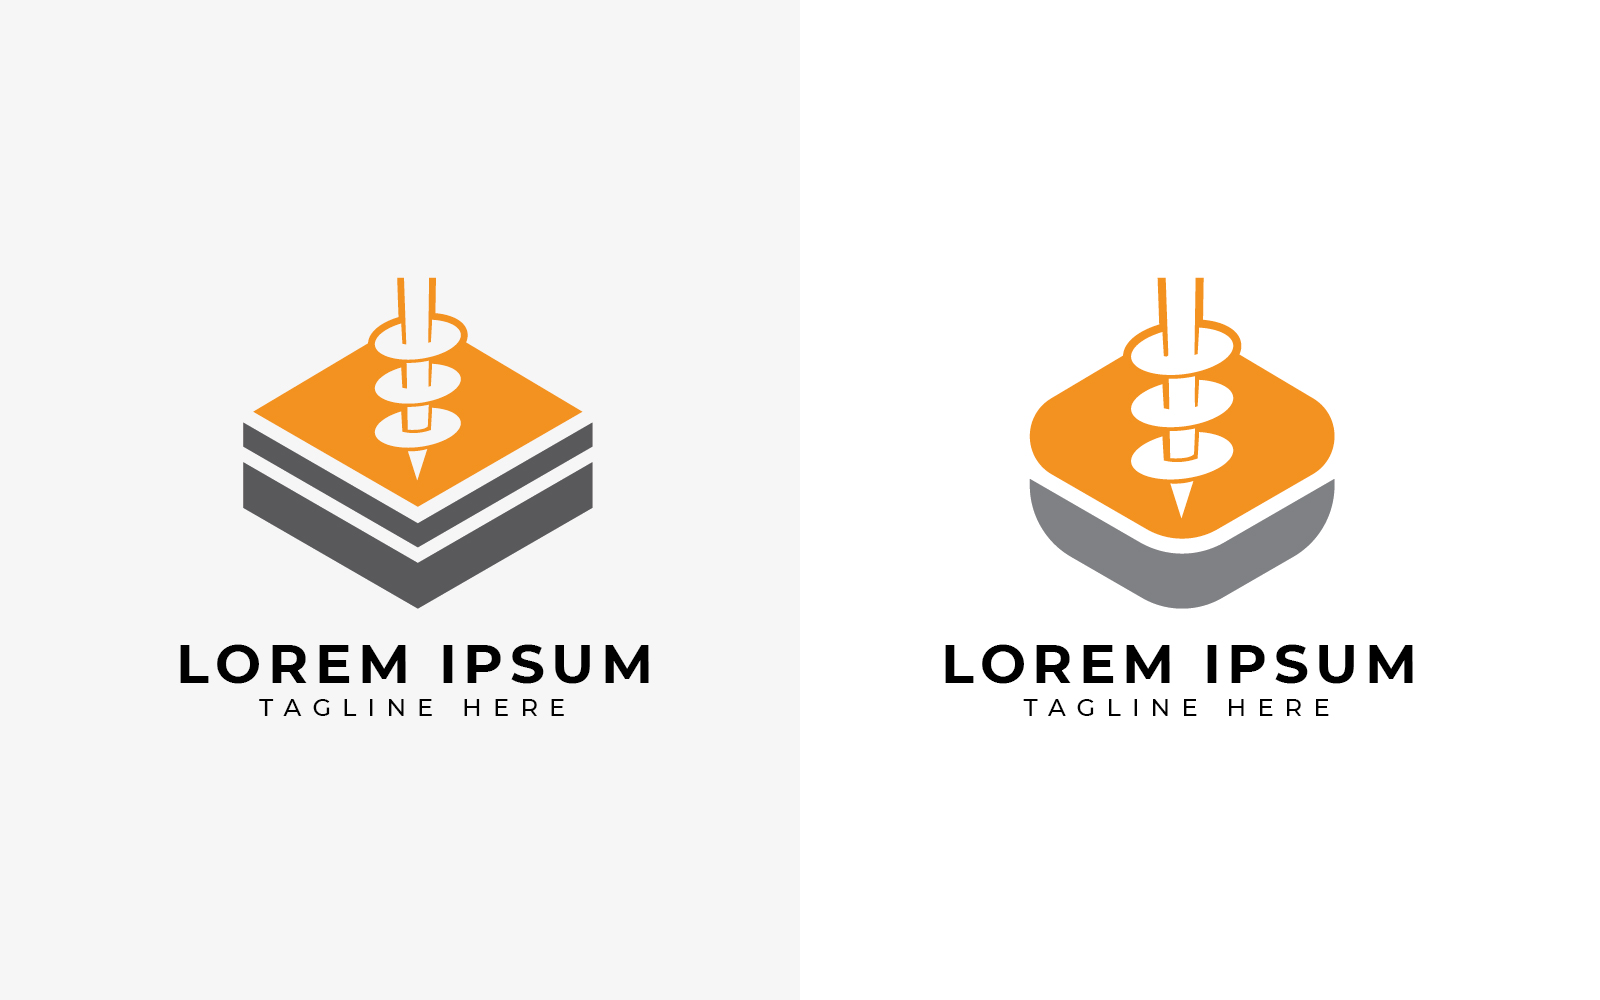 engineering logo design samples